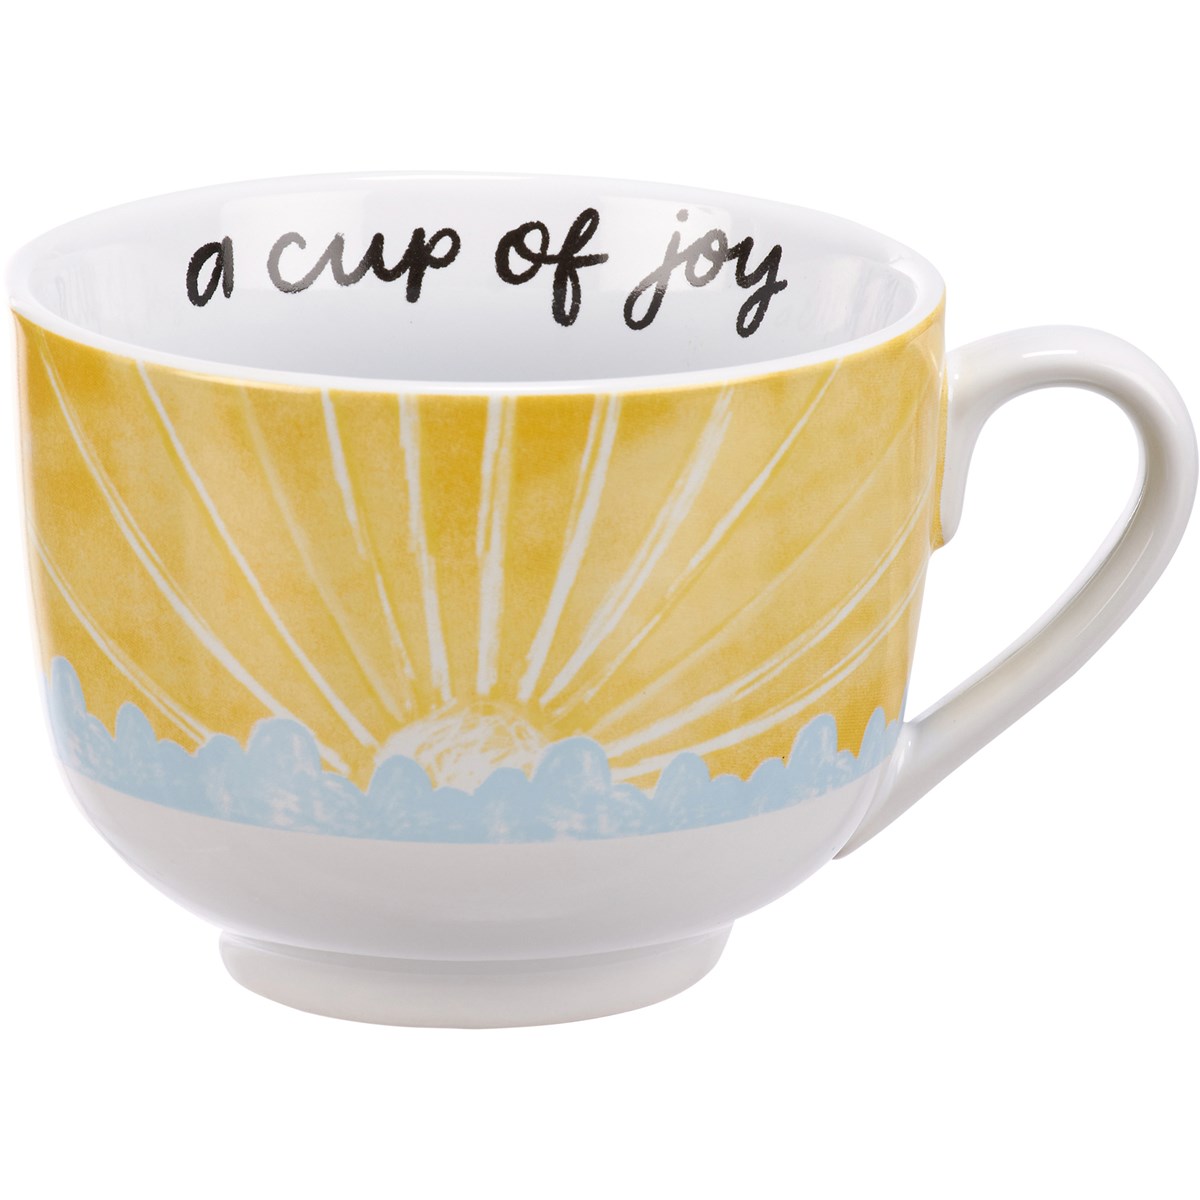 A Cup Of Joy Mug - Stoneware